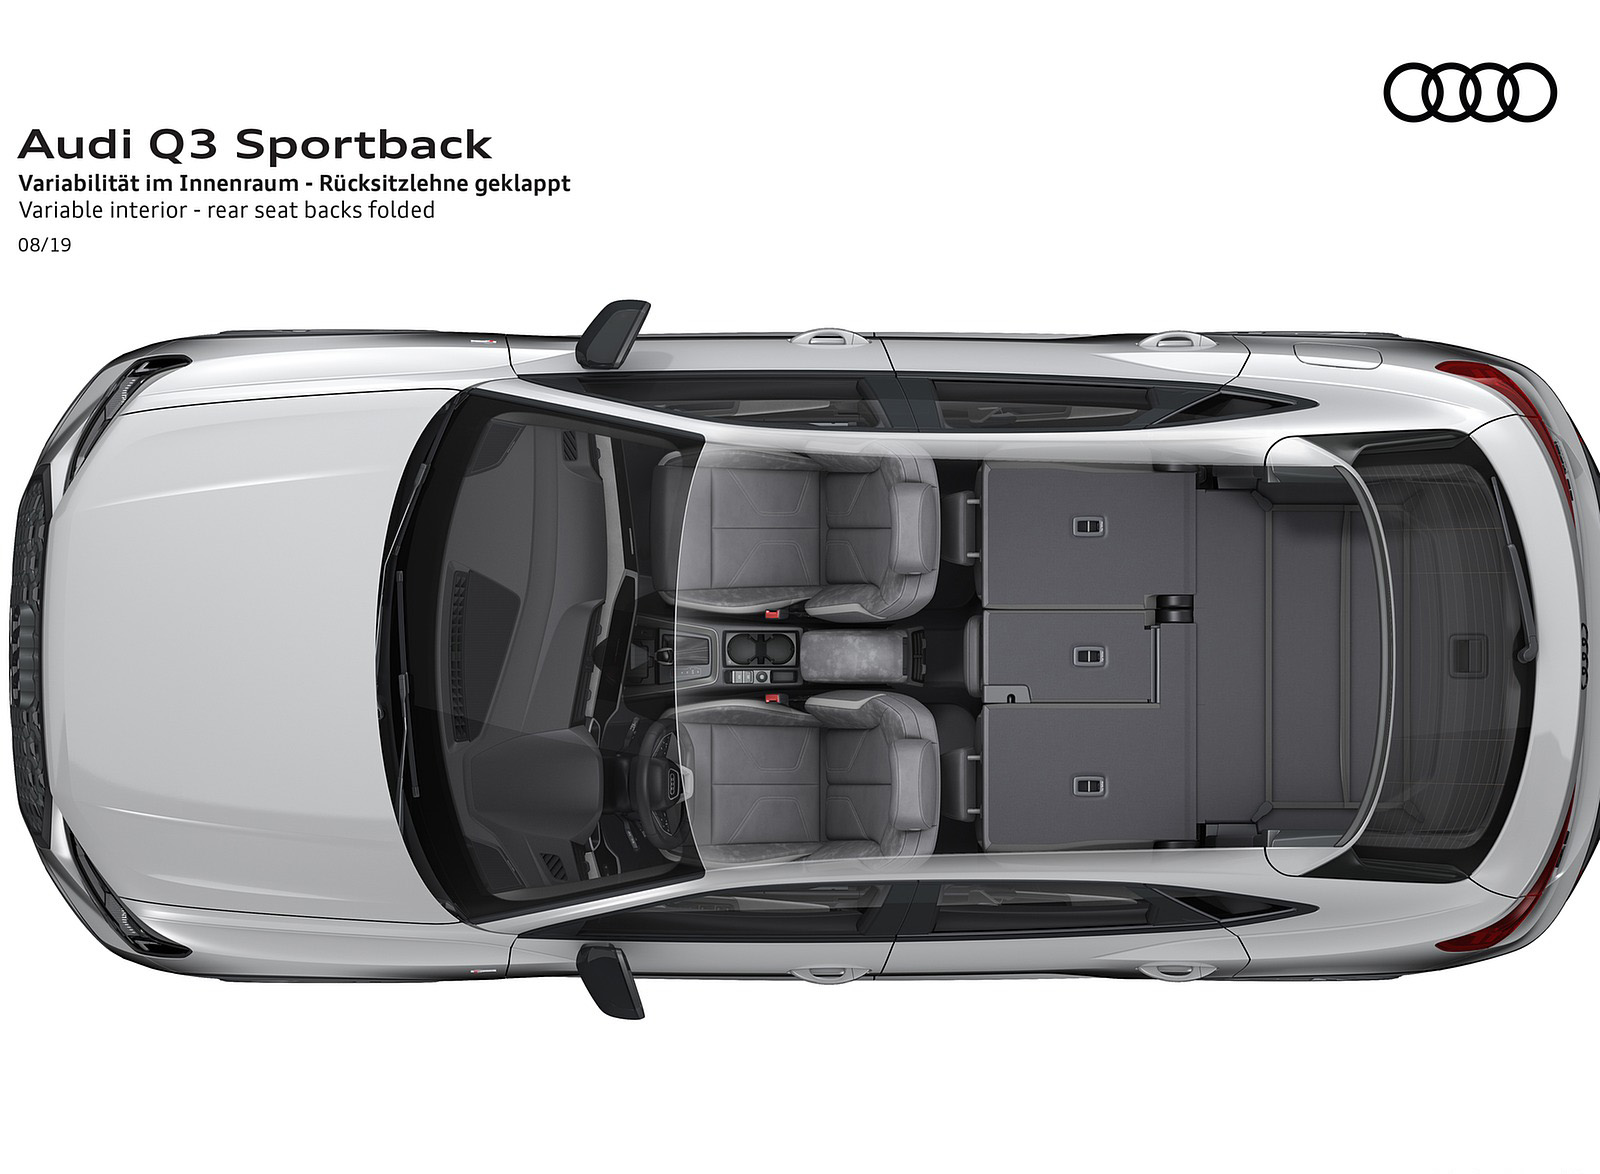 2020 Audi Q3 Sportback Variable interior rear seat backs folded Wallpapers #266 of 285